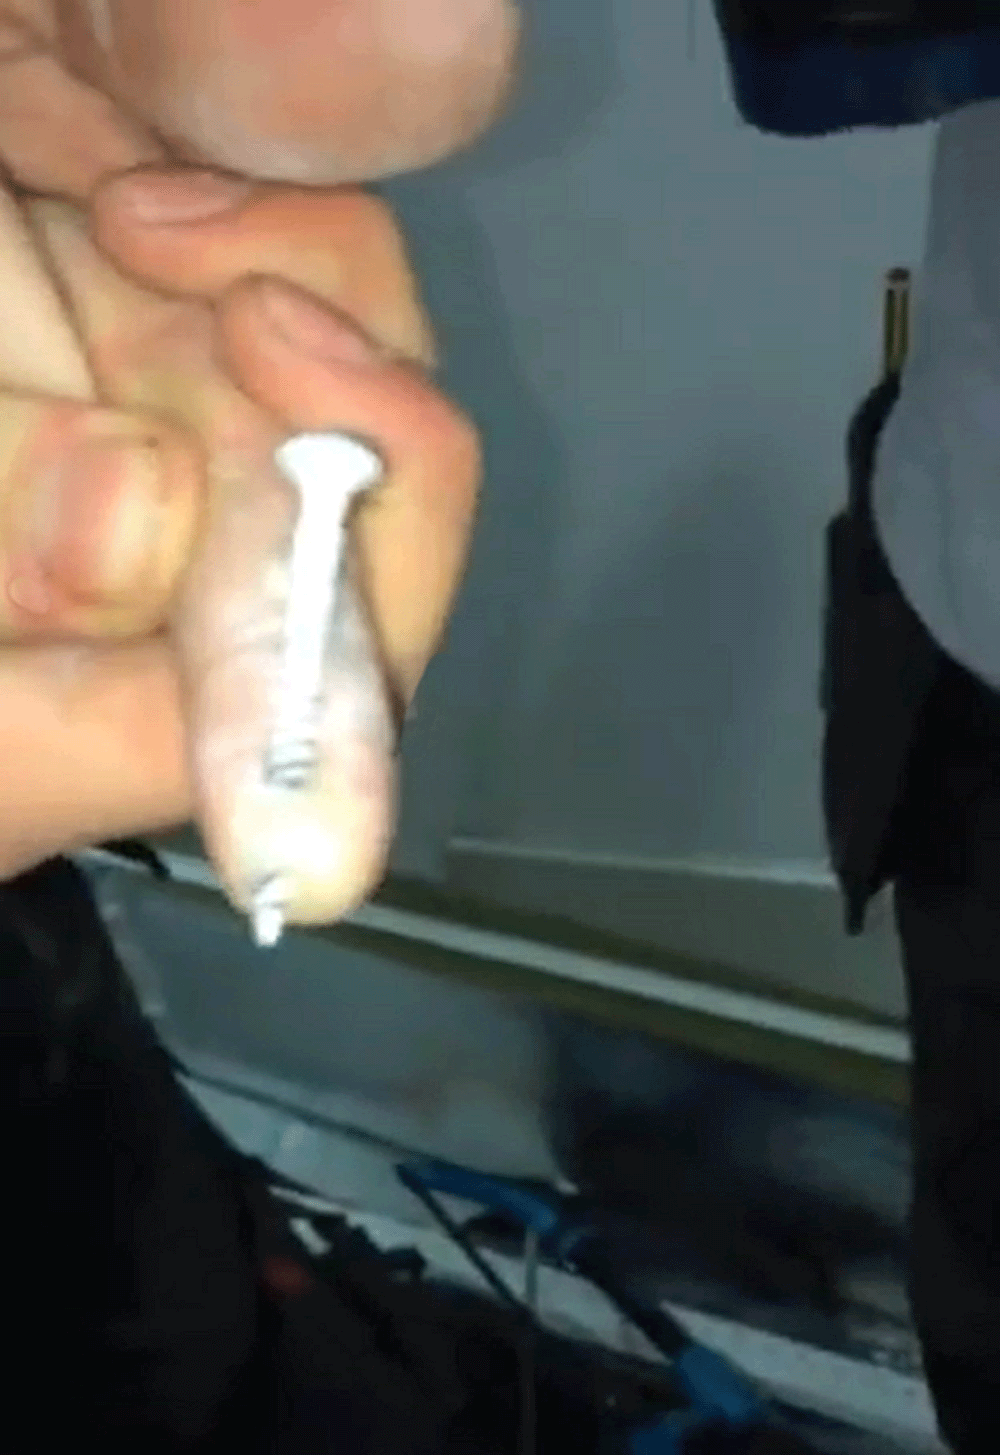 The screw stuck through the finger